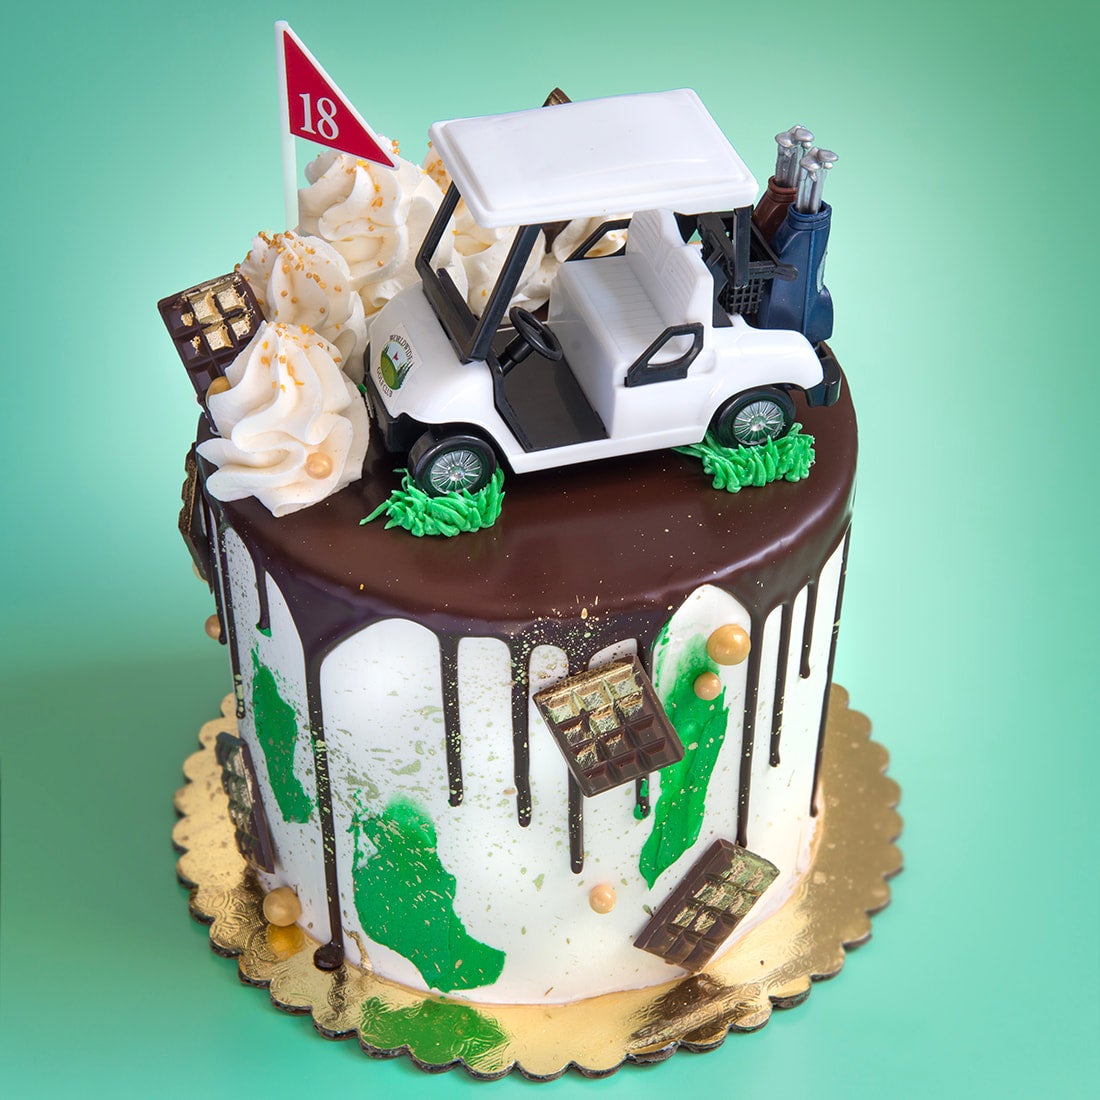 Bow Cake Topper Large: Fashion Foam Baking Cake Decoration Birthday Party  Decor 